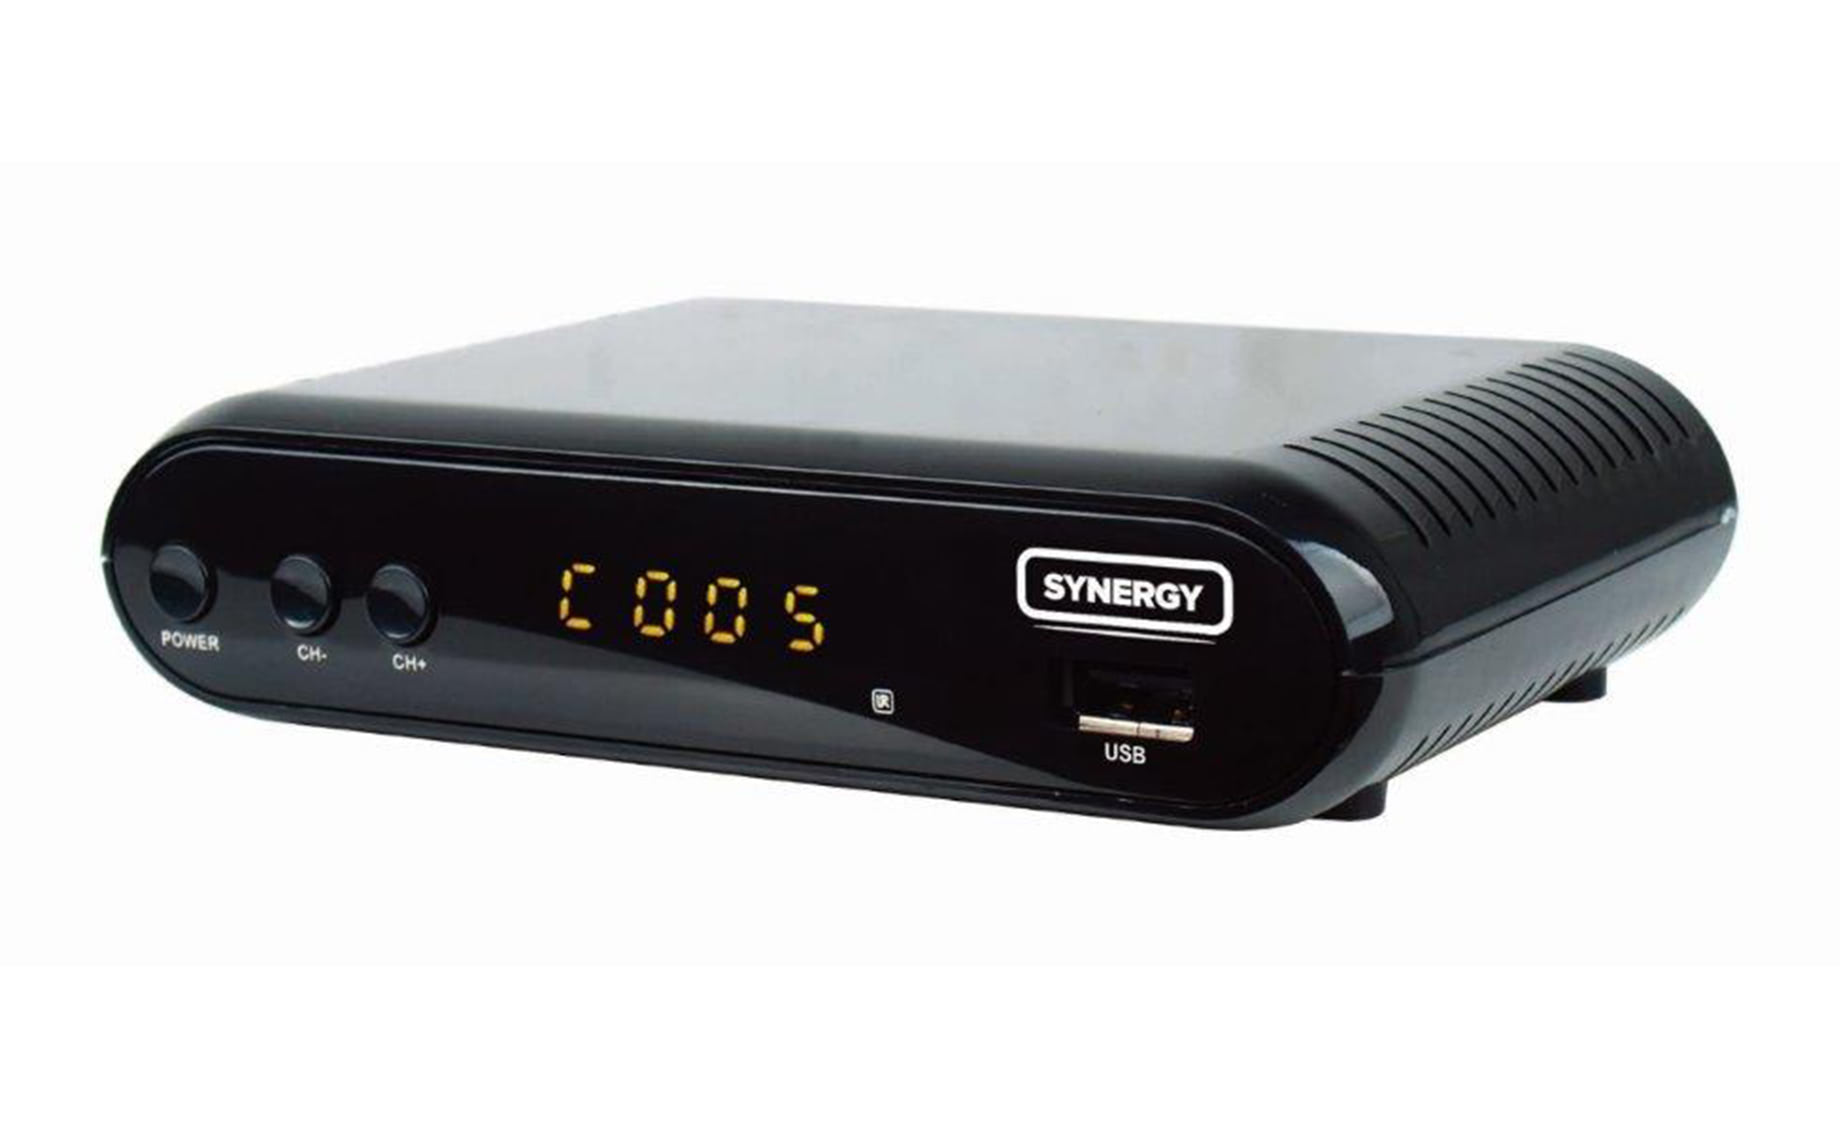 Synergy T-202 DVB-T2 Hevc digitalni zemaljski prijamnik